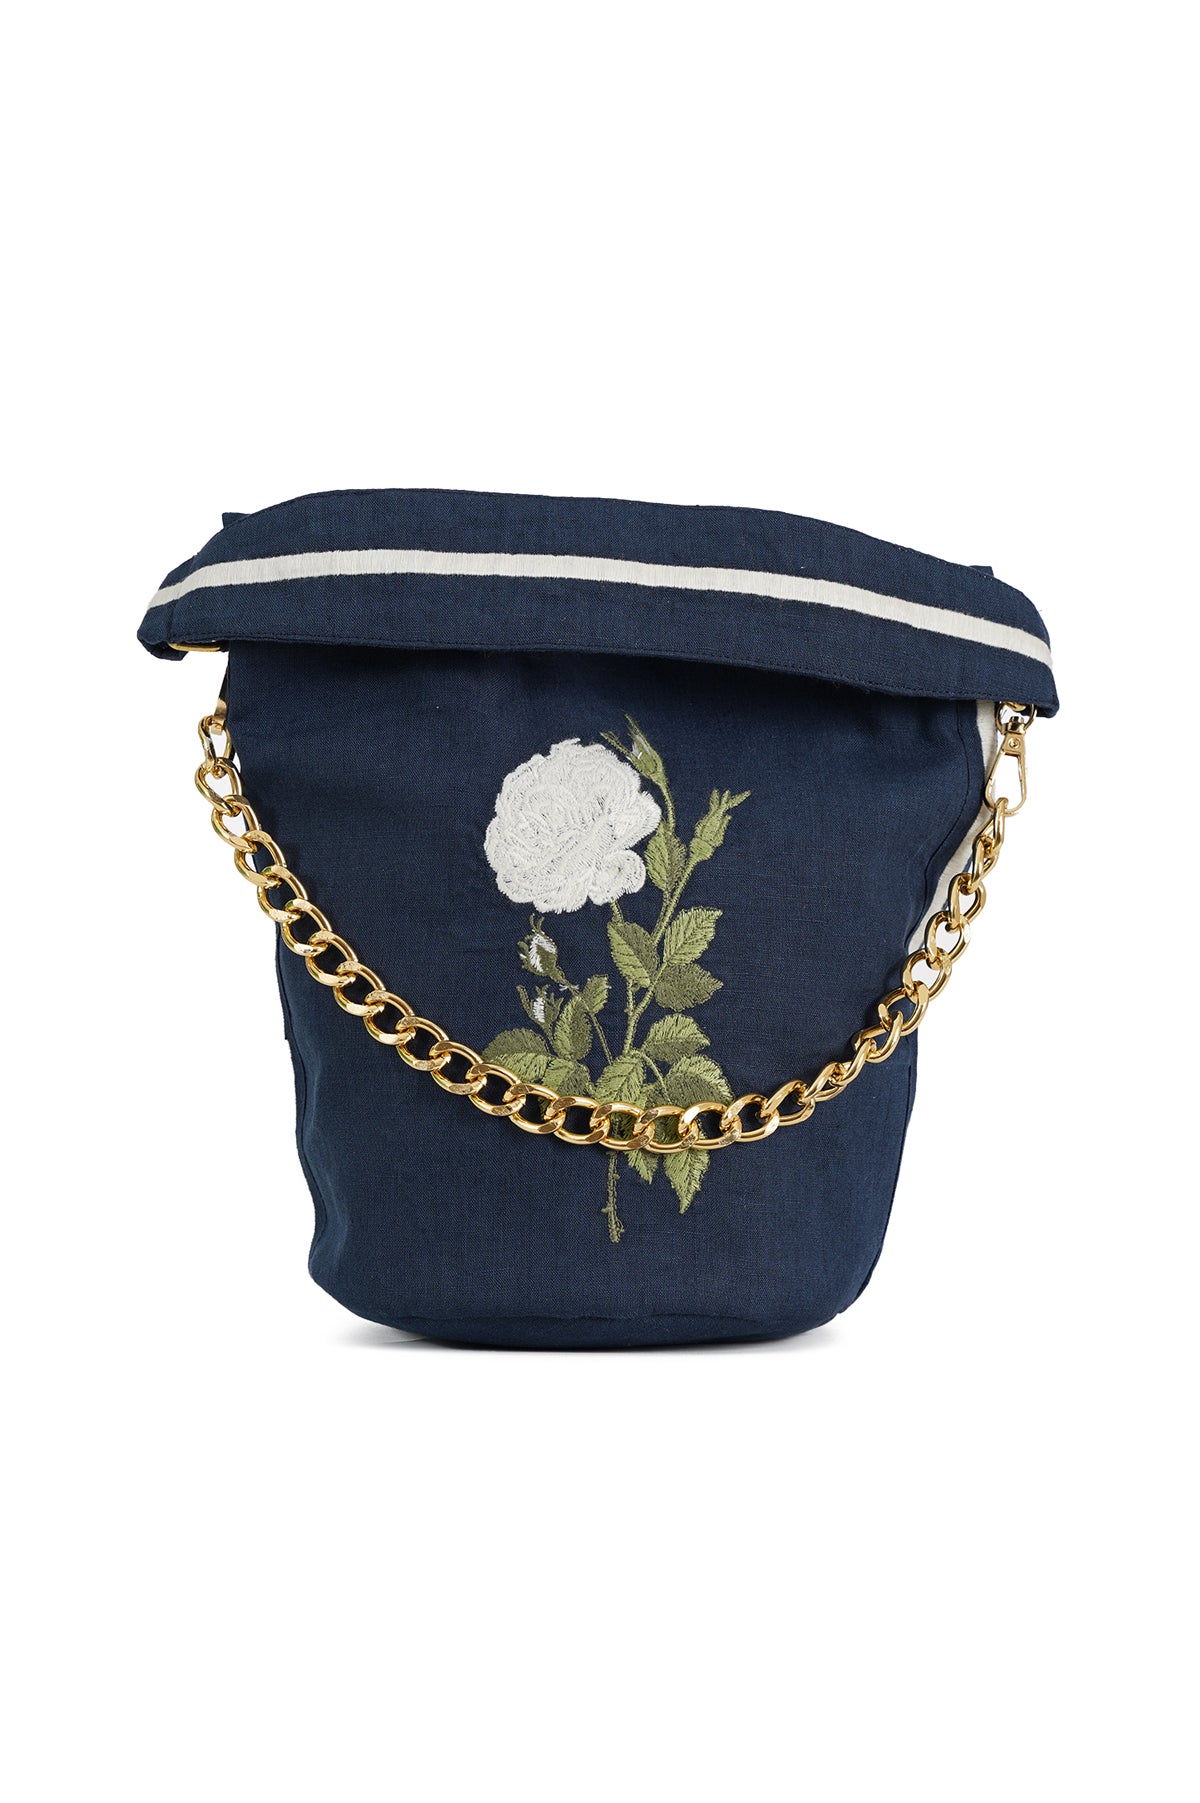 POLIN Navy Bag